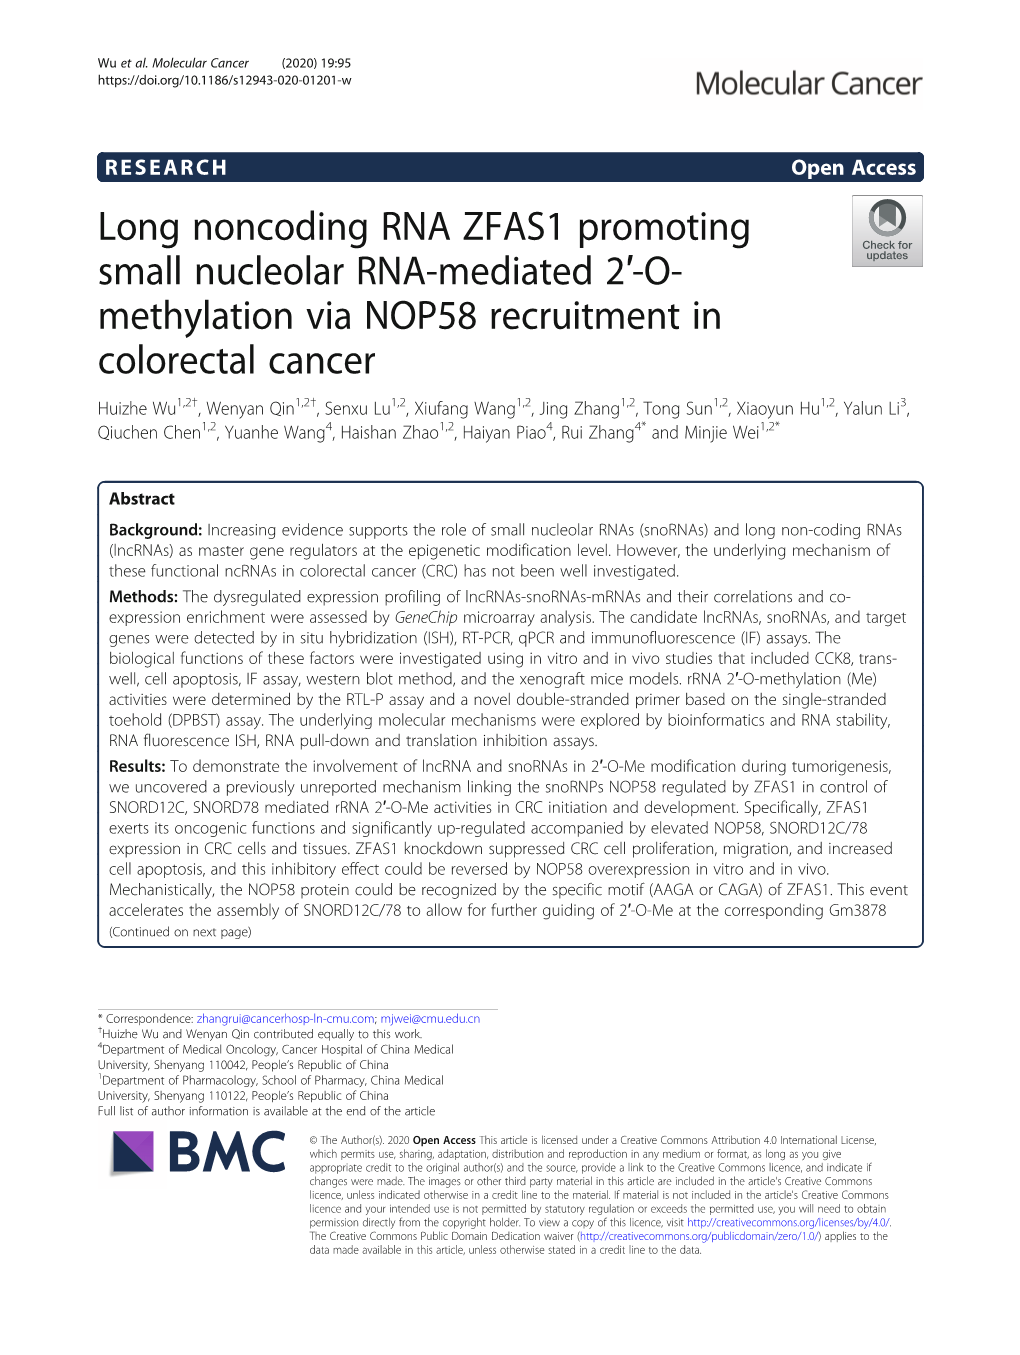 O-Methylation Via NOP58 Recruitment in Colorectal Cancer